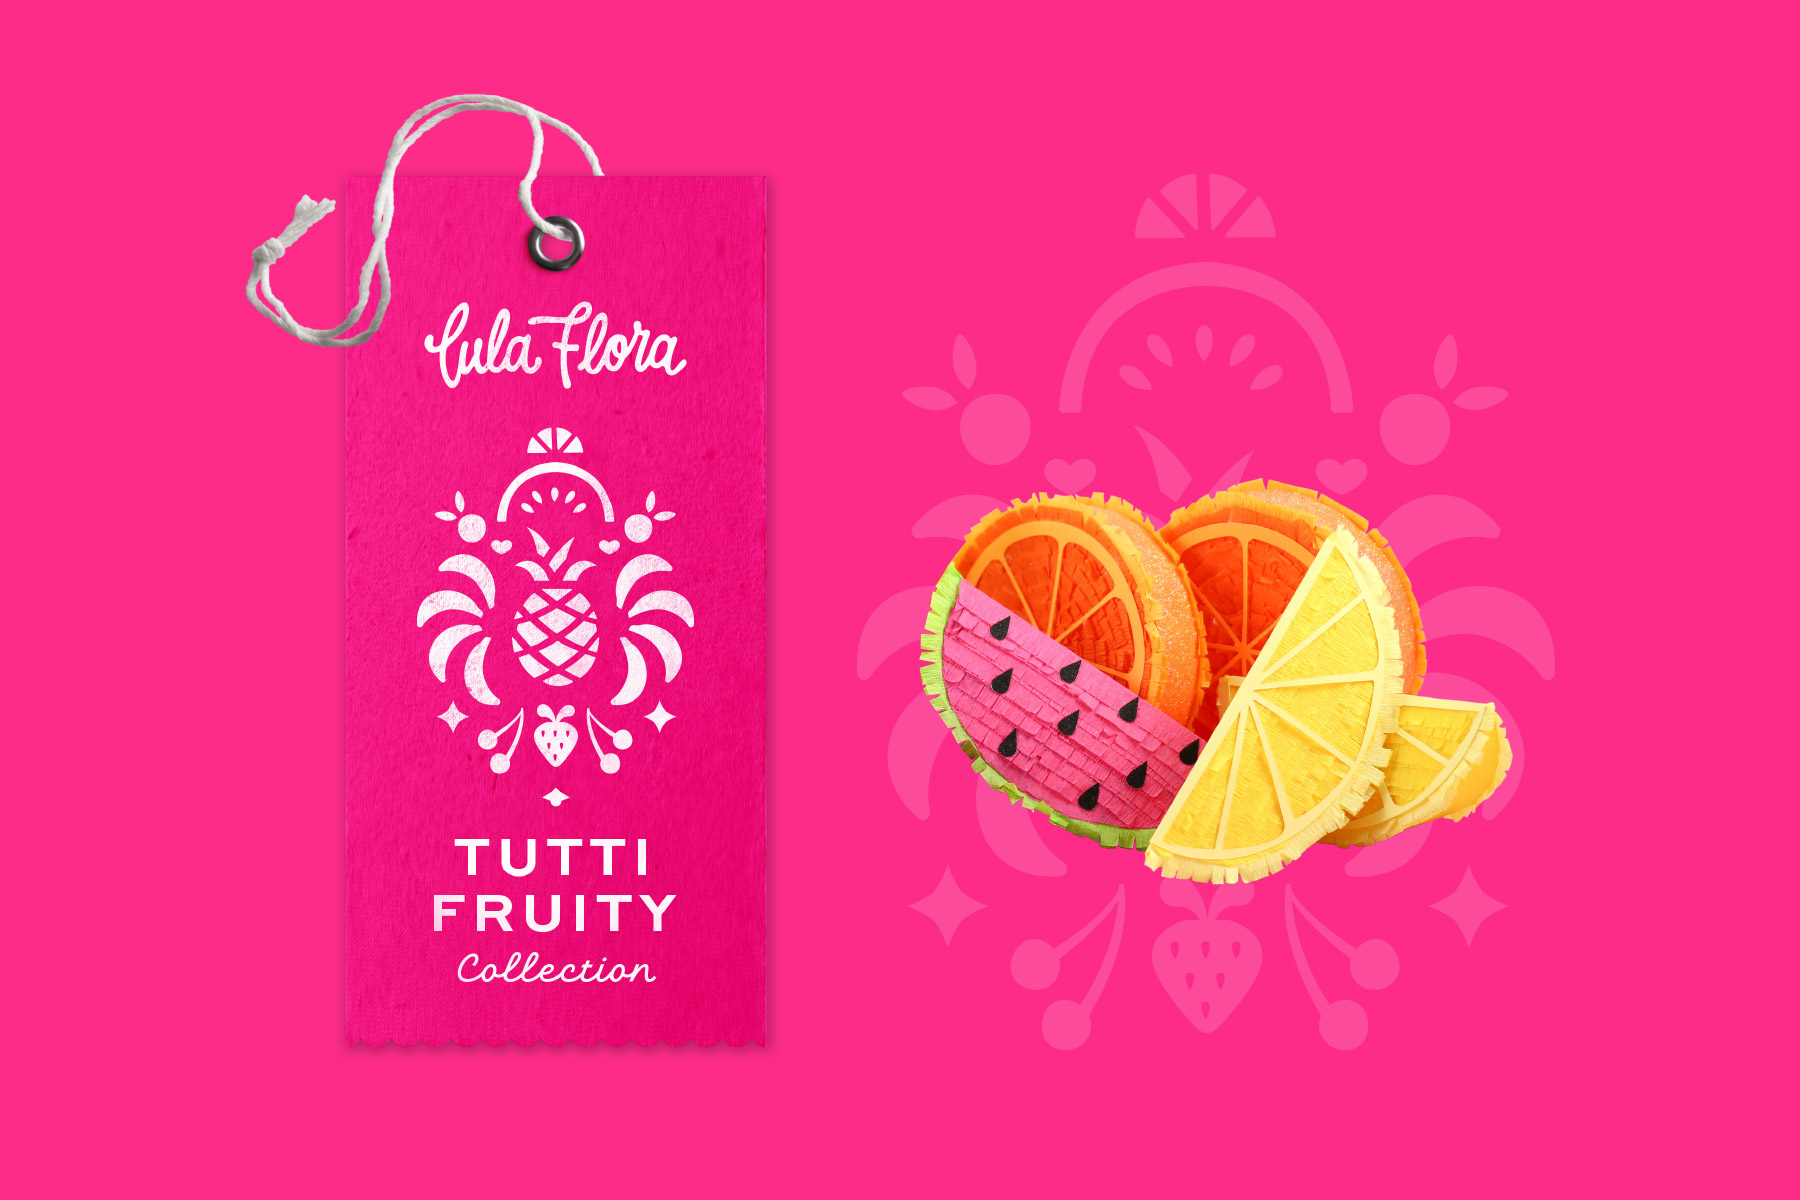 Watermelon, orange, and lemon miniature piñatas and a product hang tag